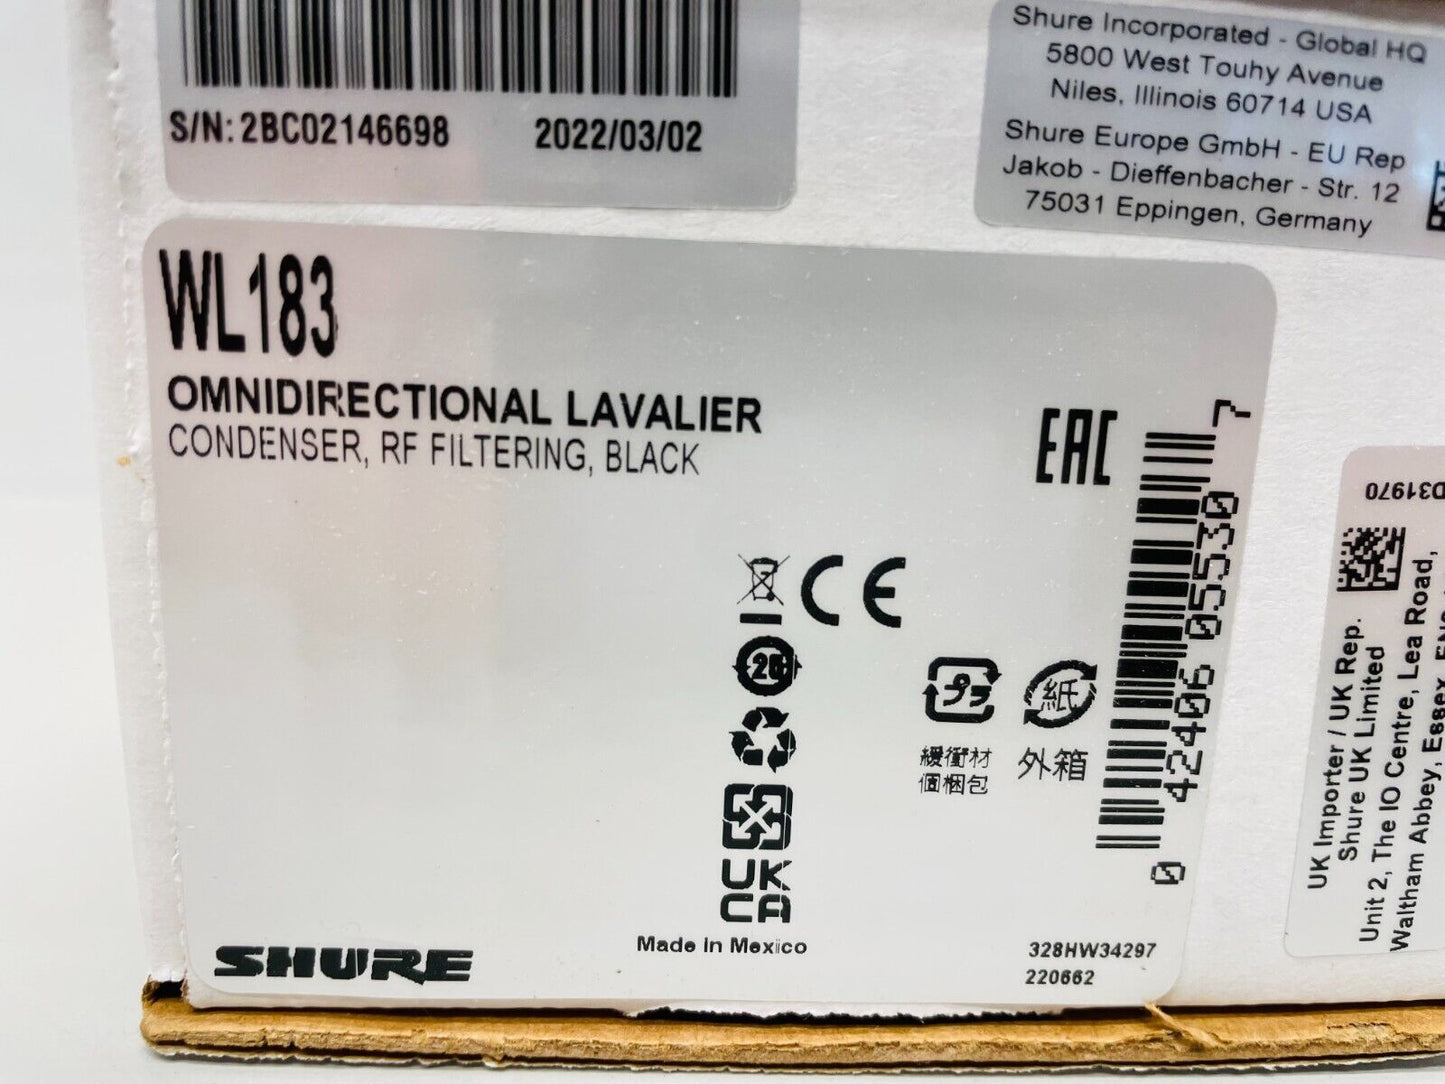 Shure WL183 Omnidirectional Lavalier, Condenser, RF Filtering, Black